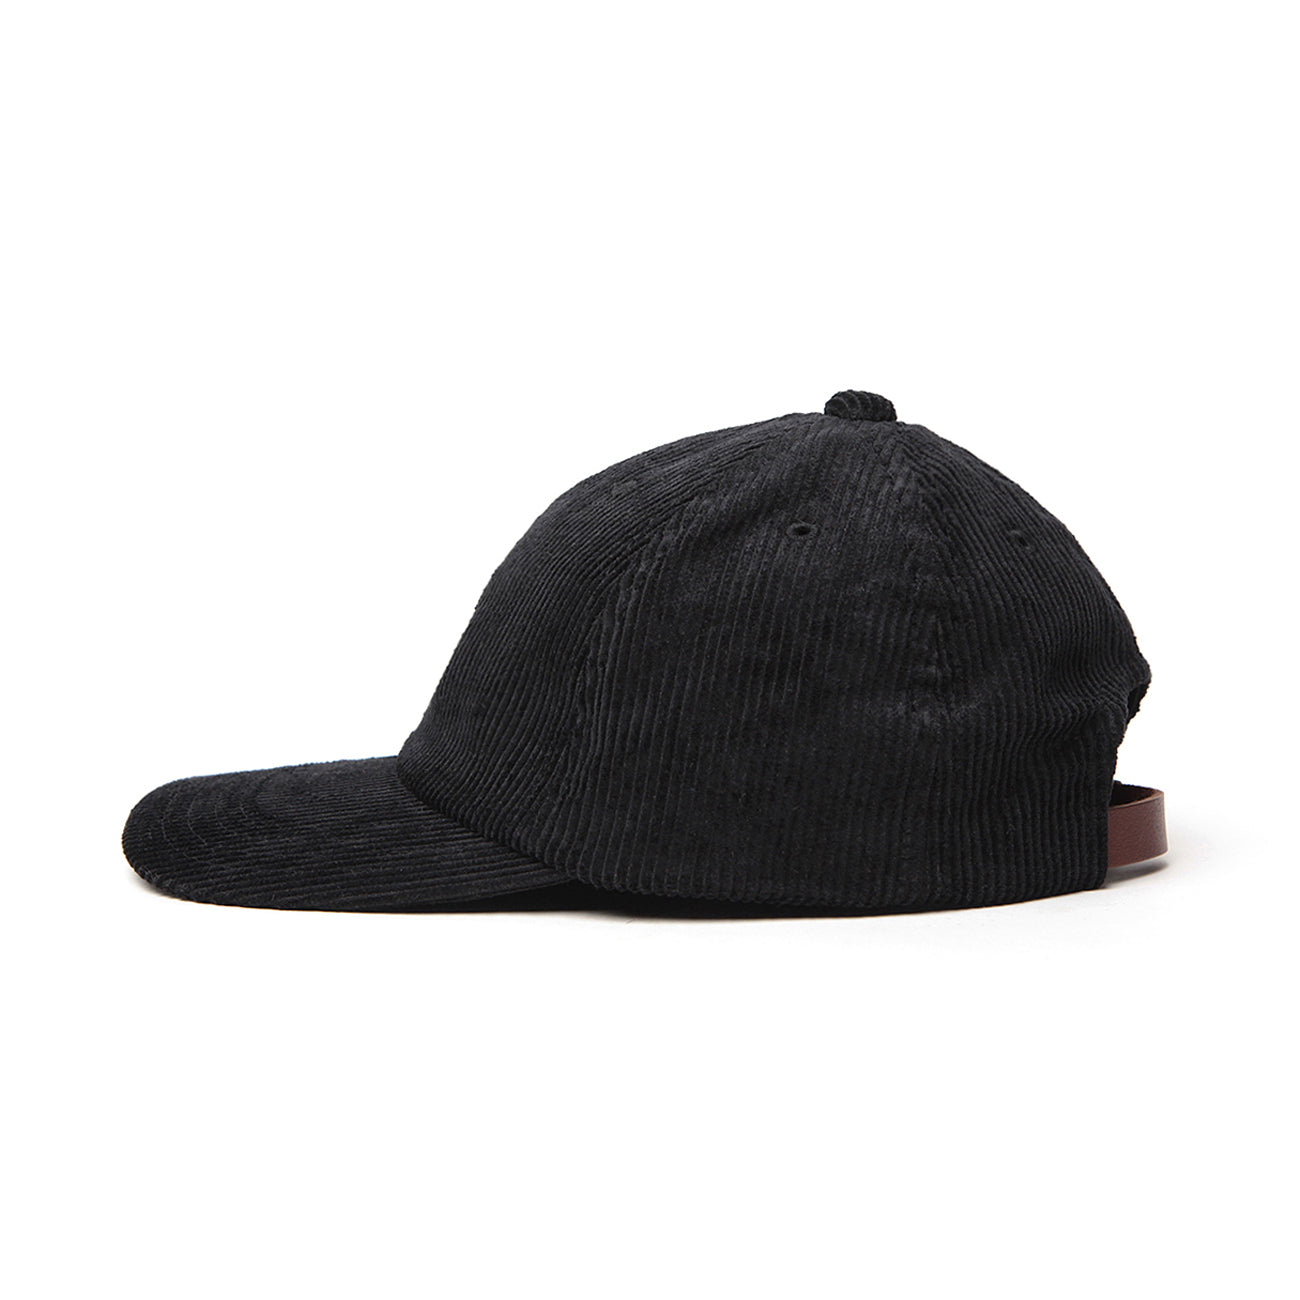 KED CAP S (CORDUROY) - BLACK